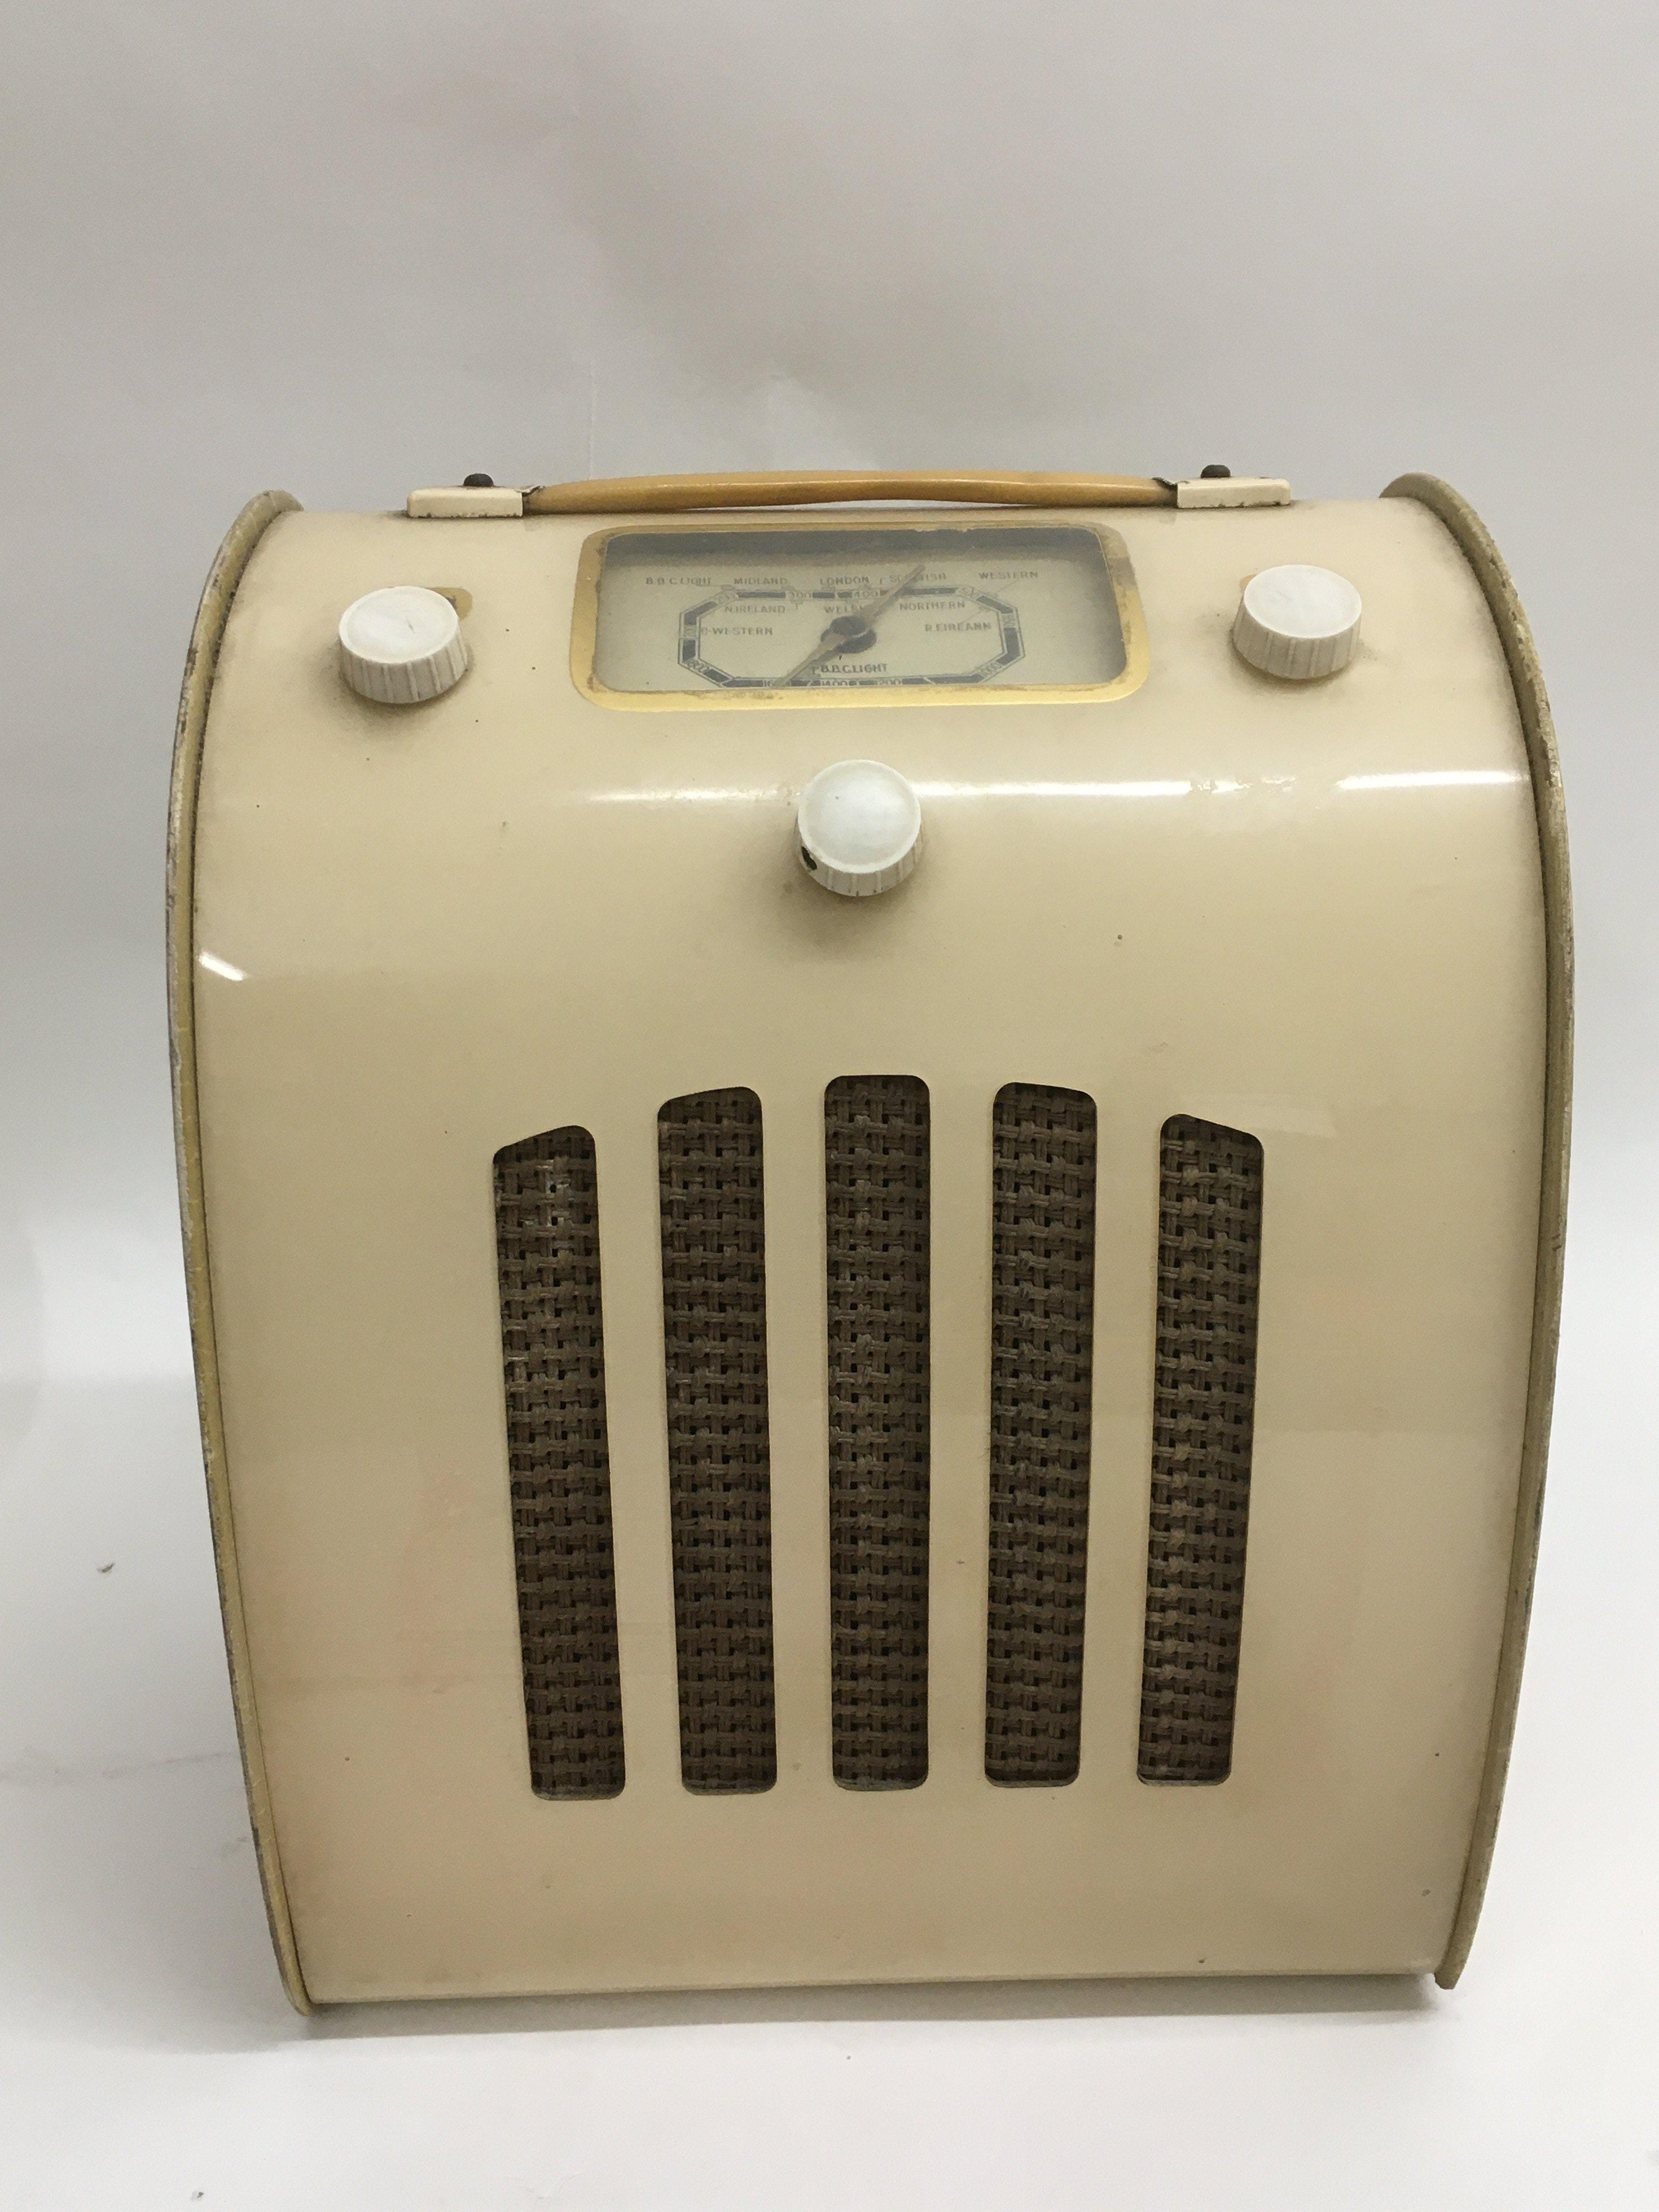 A vintage Ever Ready radio.